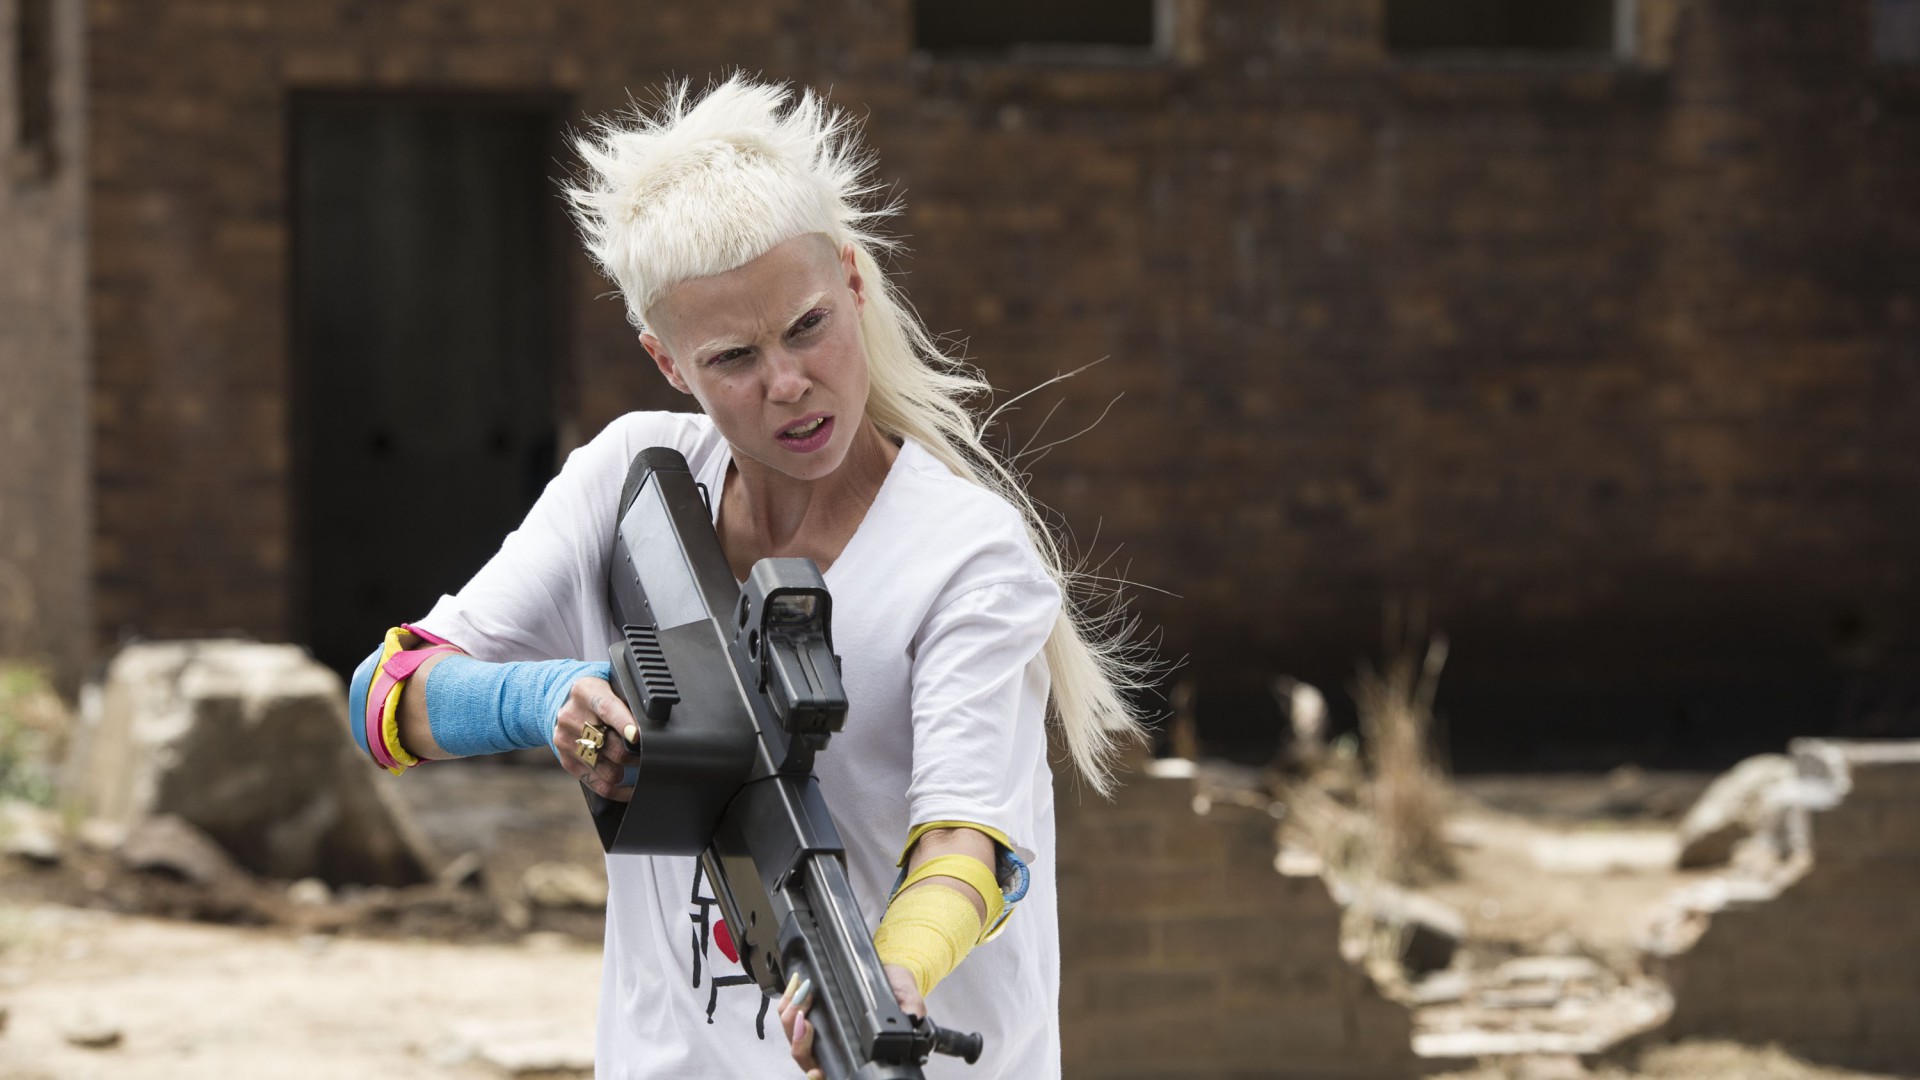 Робот по имени Чаппи, кино, фильм, робот, Chappie, Best Movies of 2015, Die Antwoord, gun (horizontal)